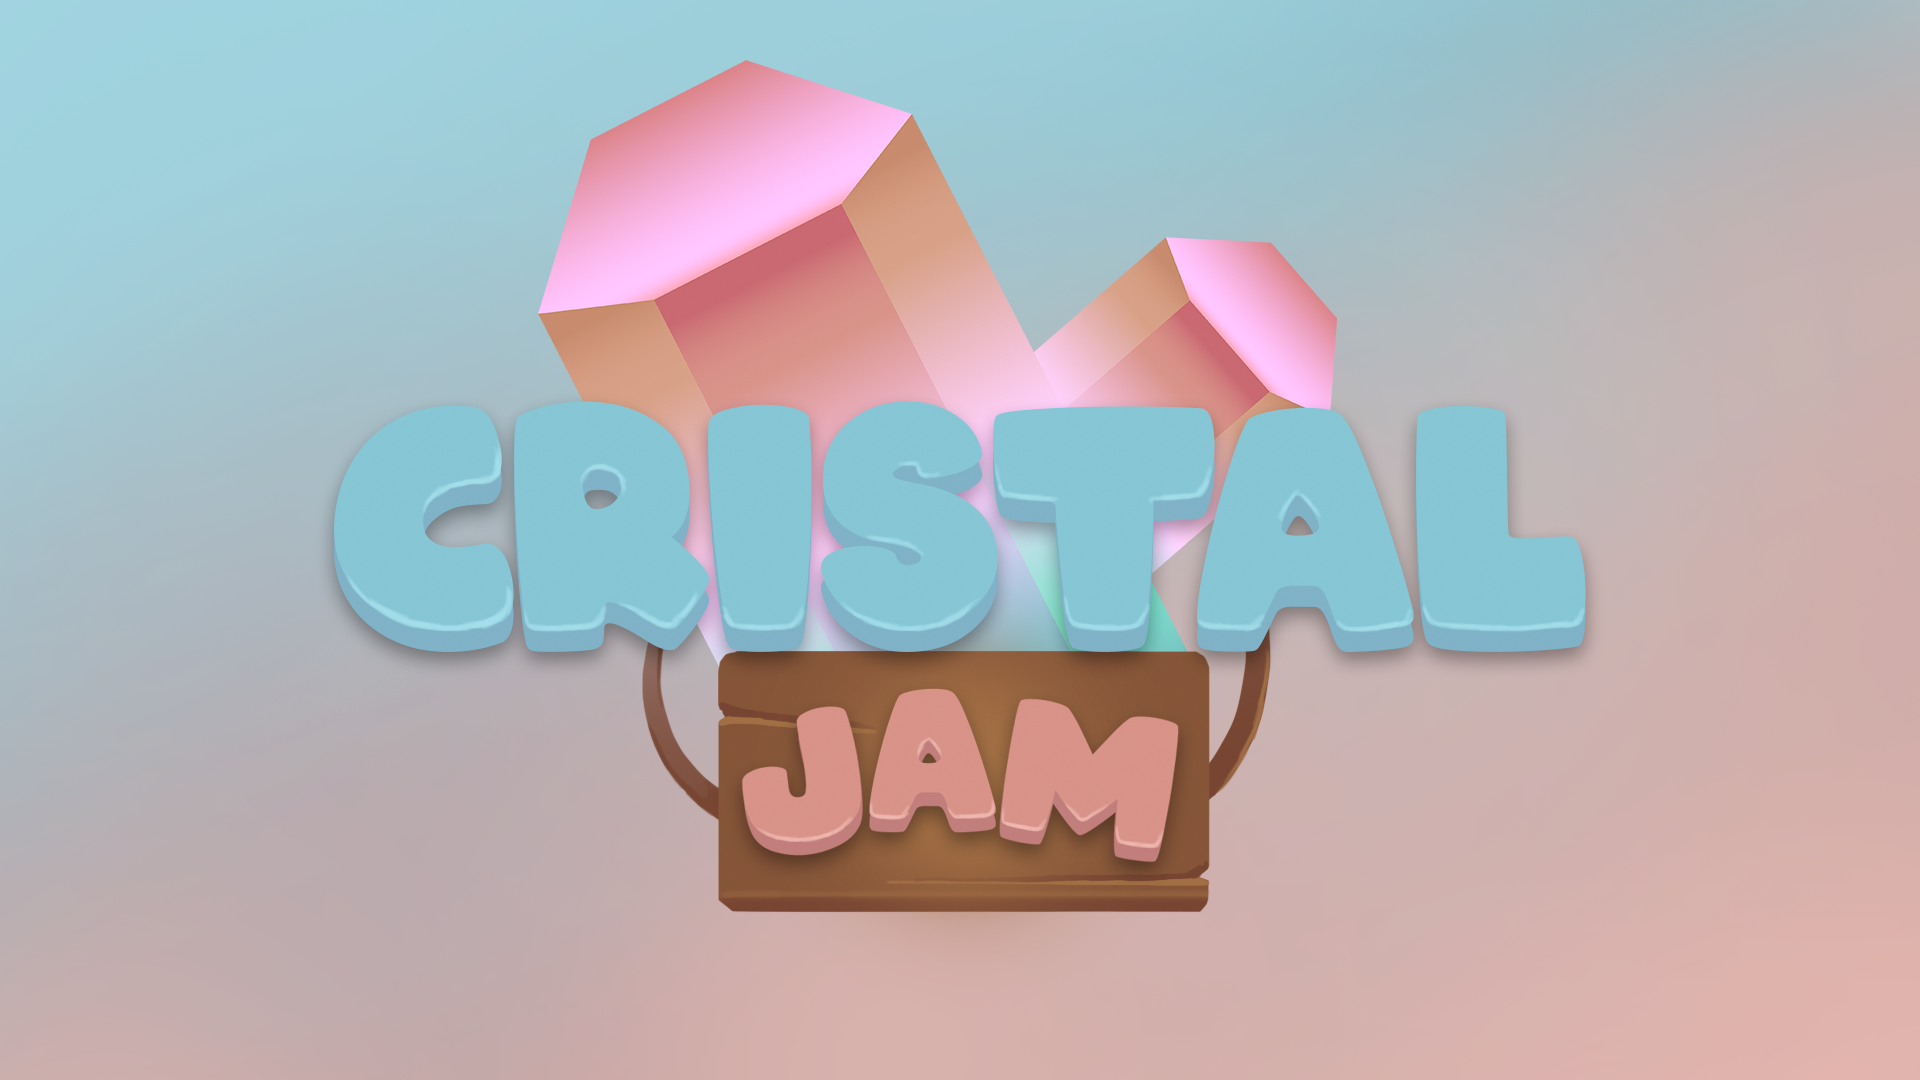 Cristal Jam